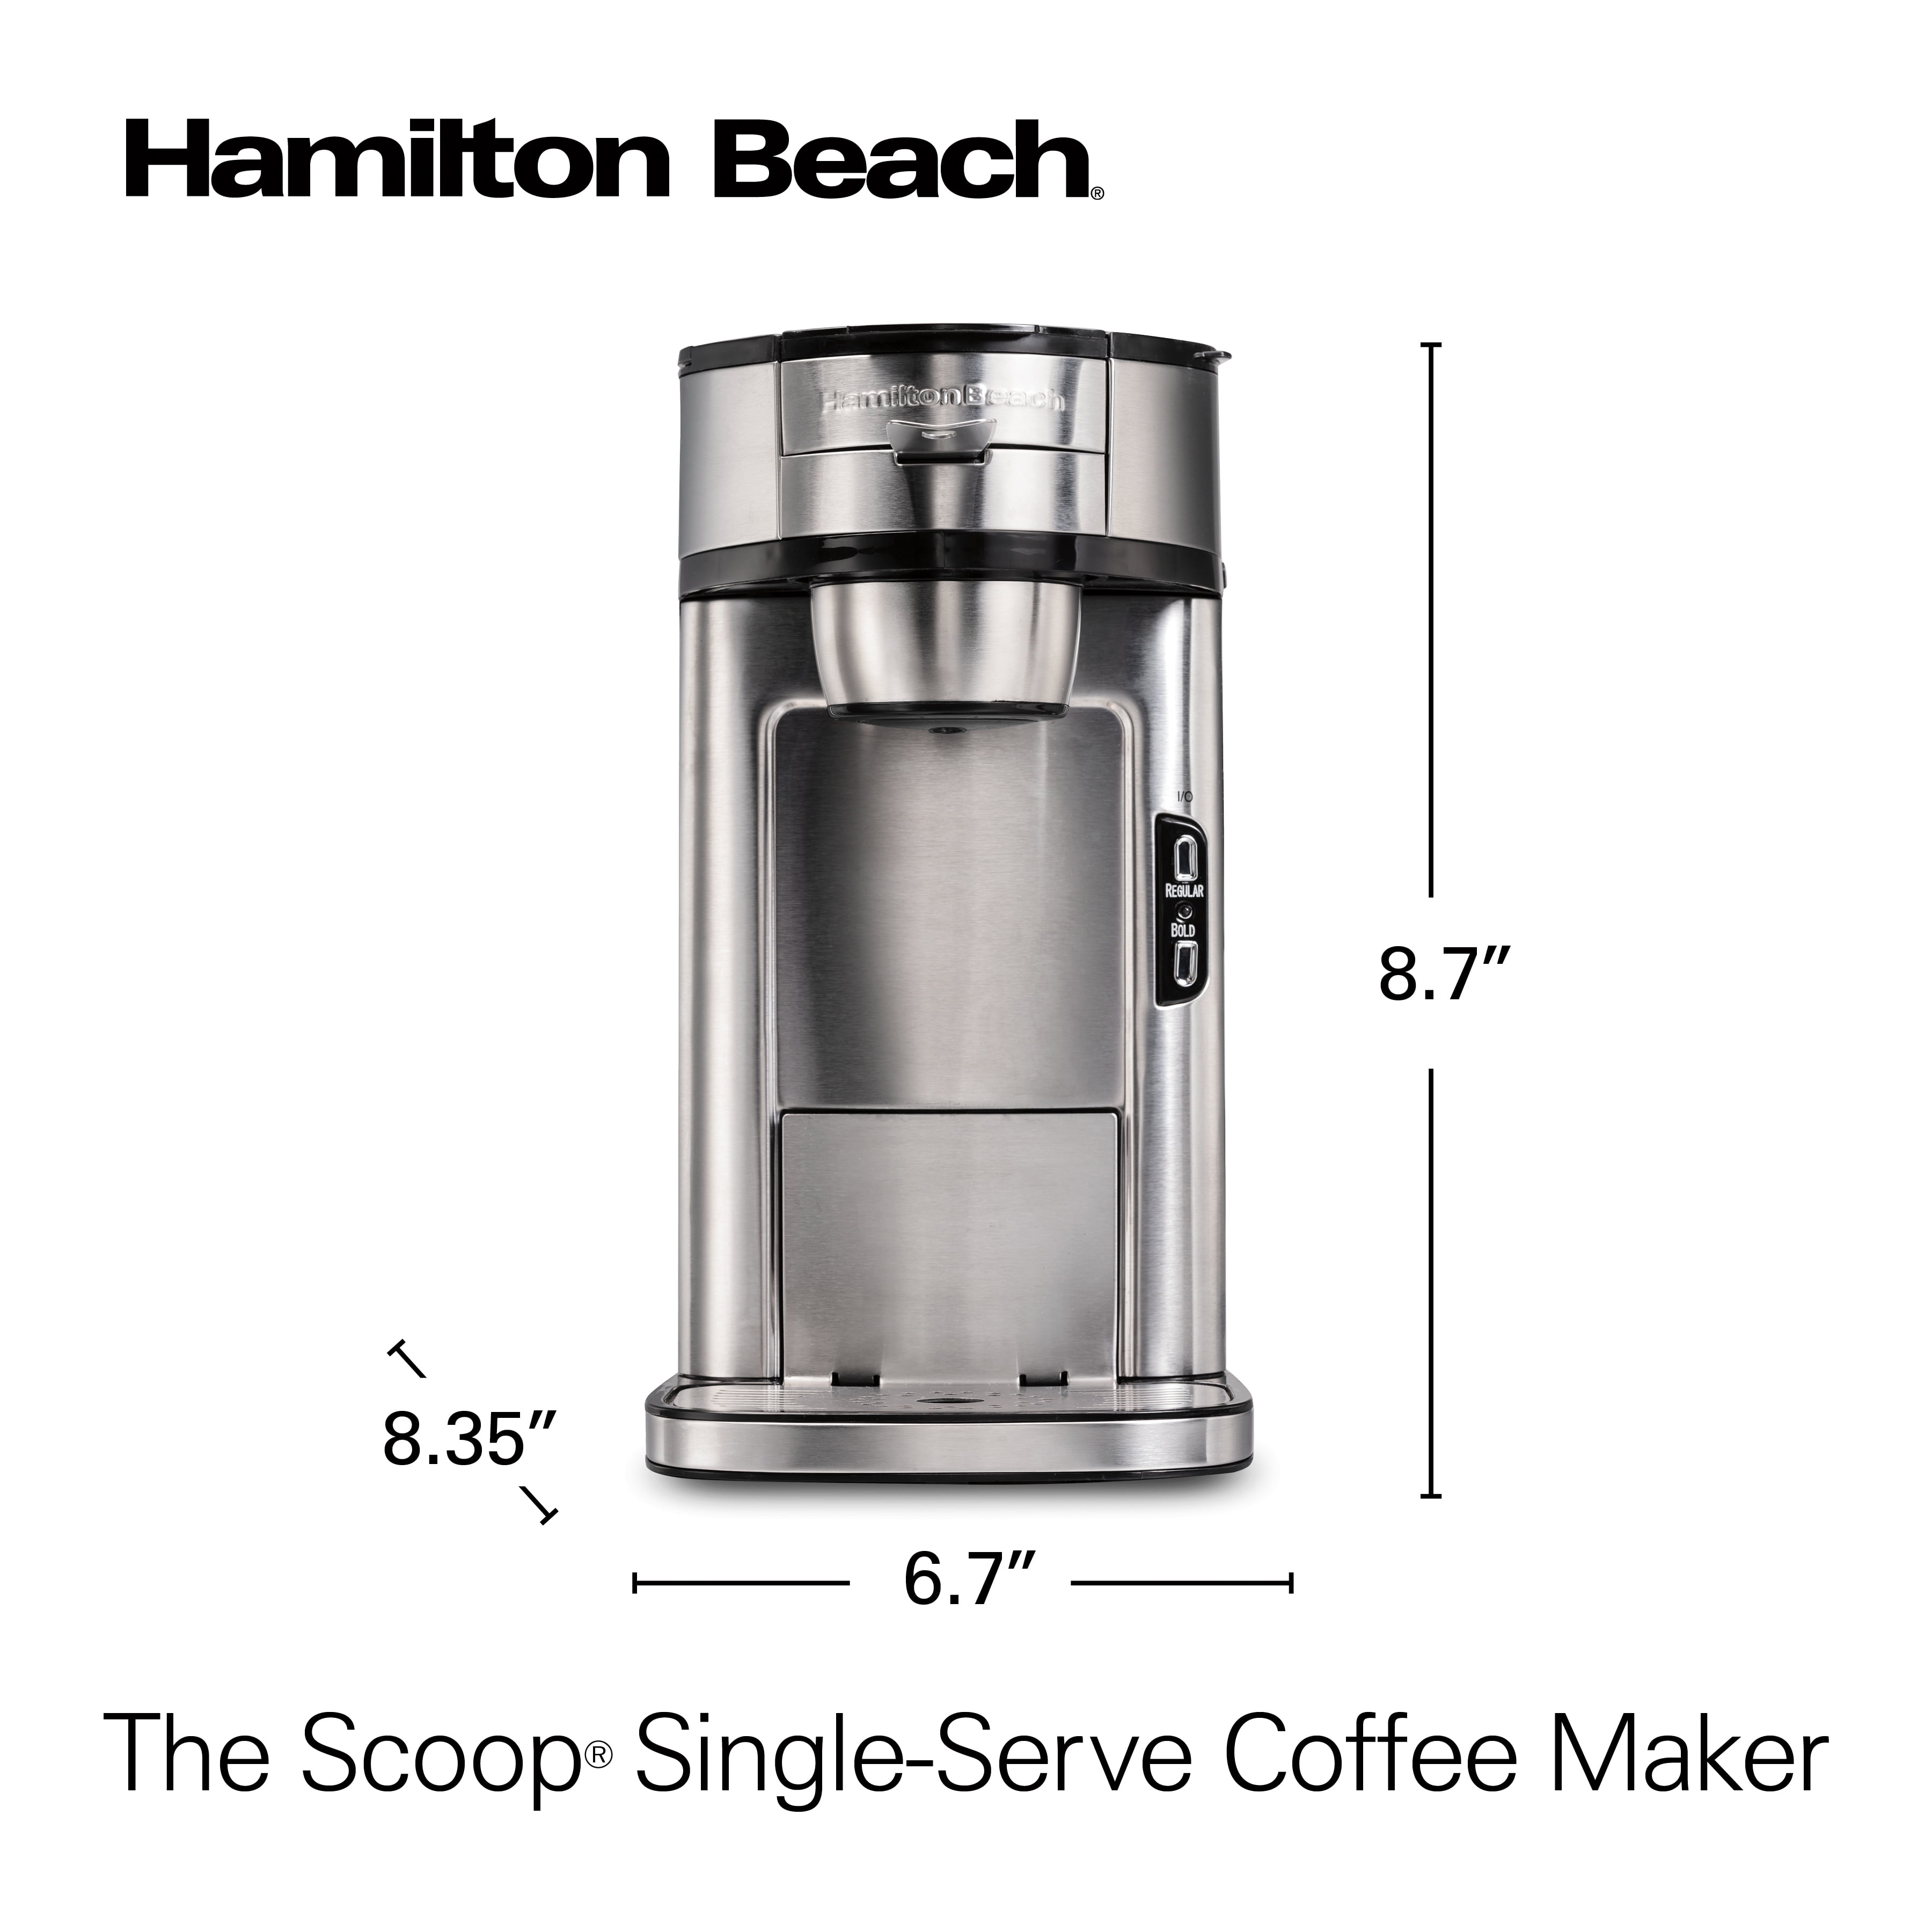 Hamilton Beach The Scoop Single-Serve Coffee Maker, 14 oz